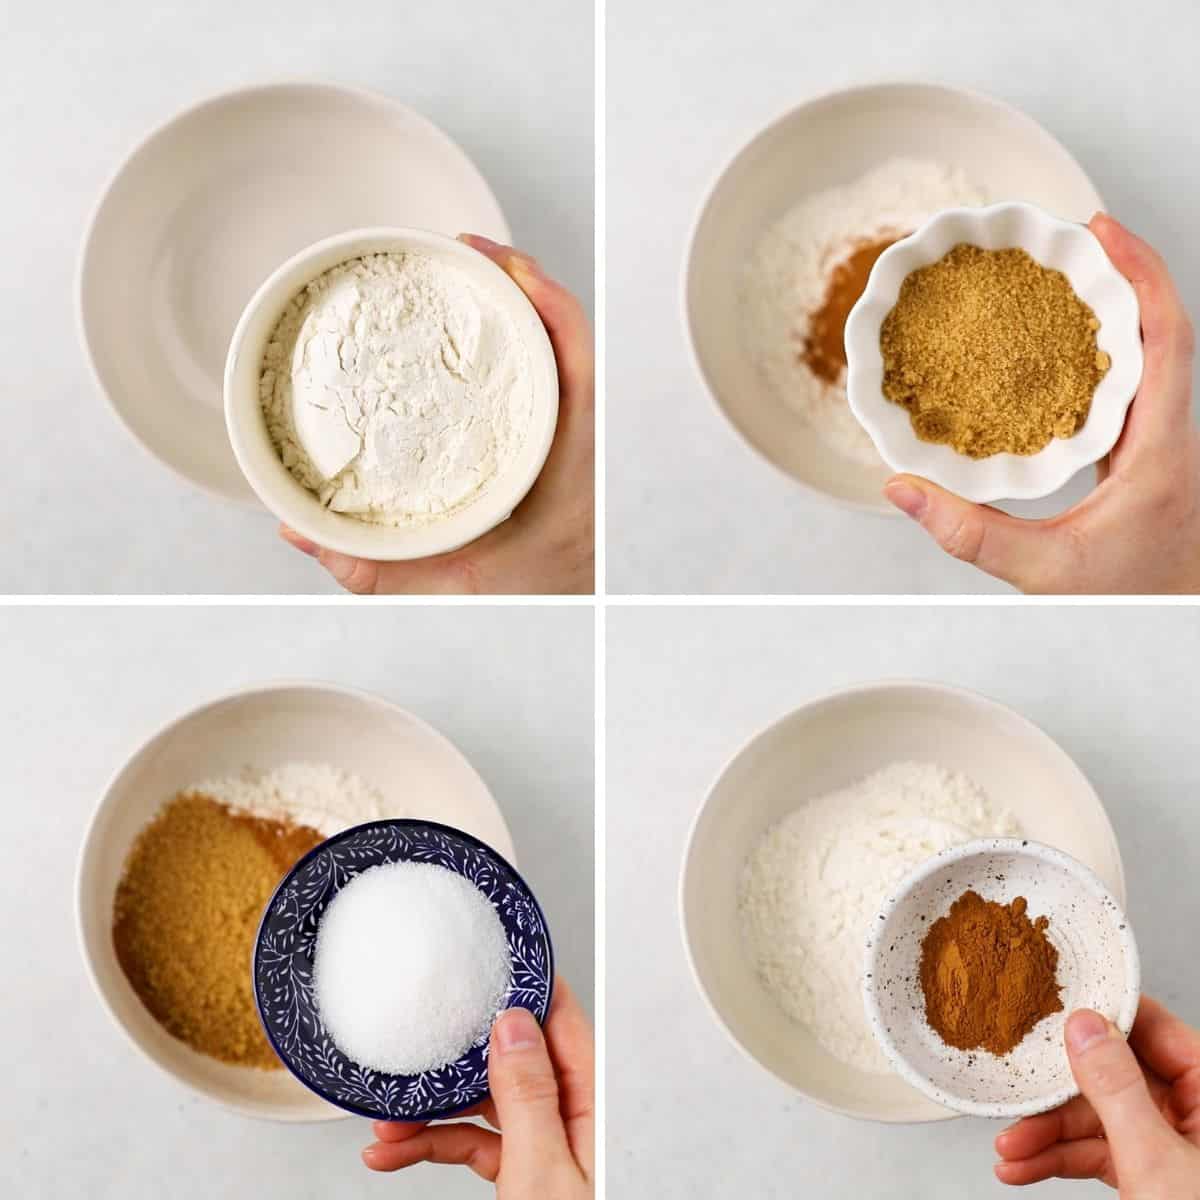 Process photos of adding flour, brown and graulated sugar, and cinnamon wot ha bowl.